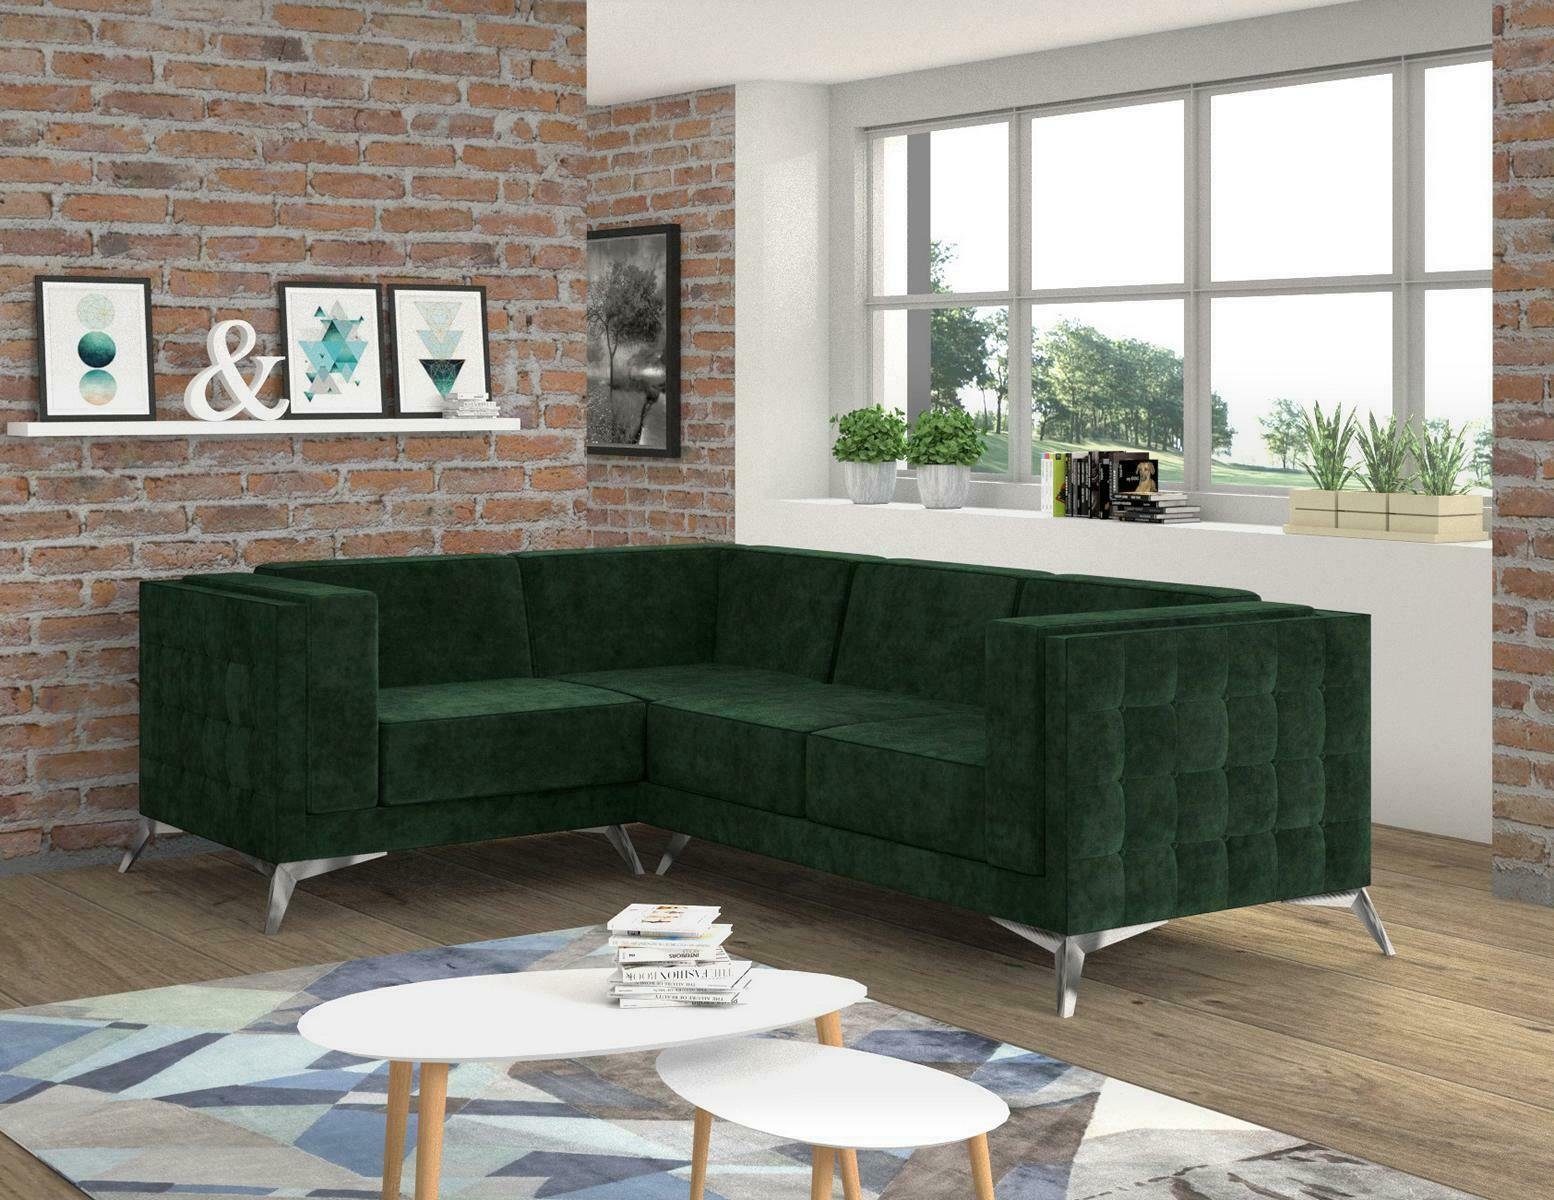 Textil Ecksofa, L JVmoebel Couchen Form Design Polster Ecksofa Couch Sofa